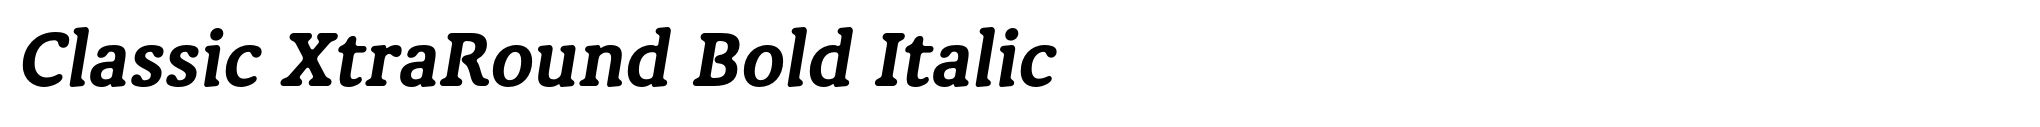 Classic XtraRound Bold Italic image